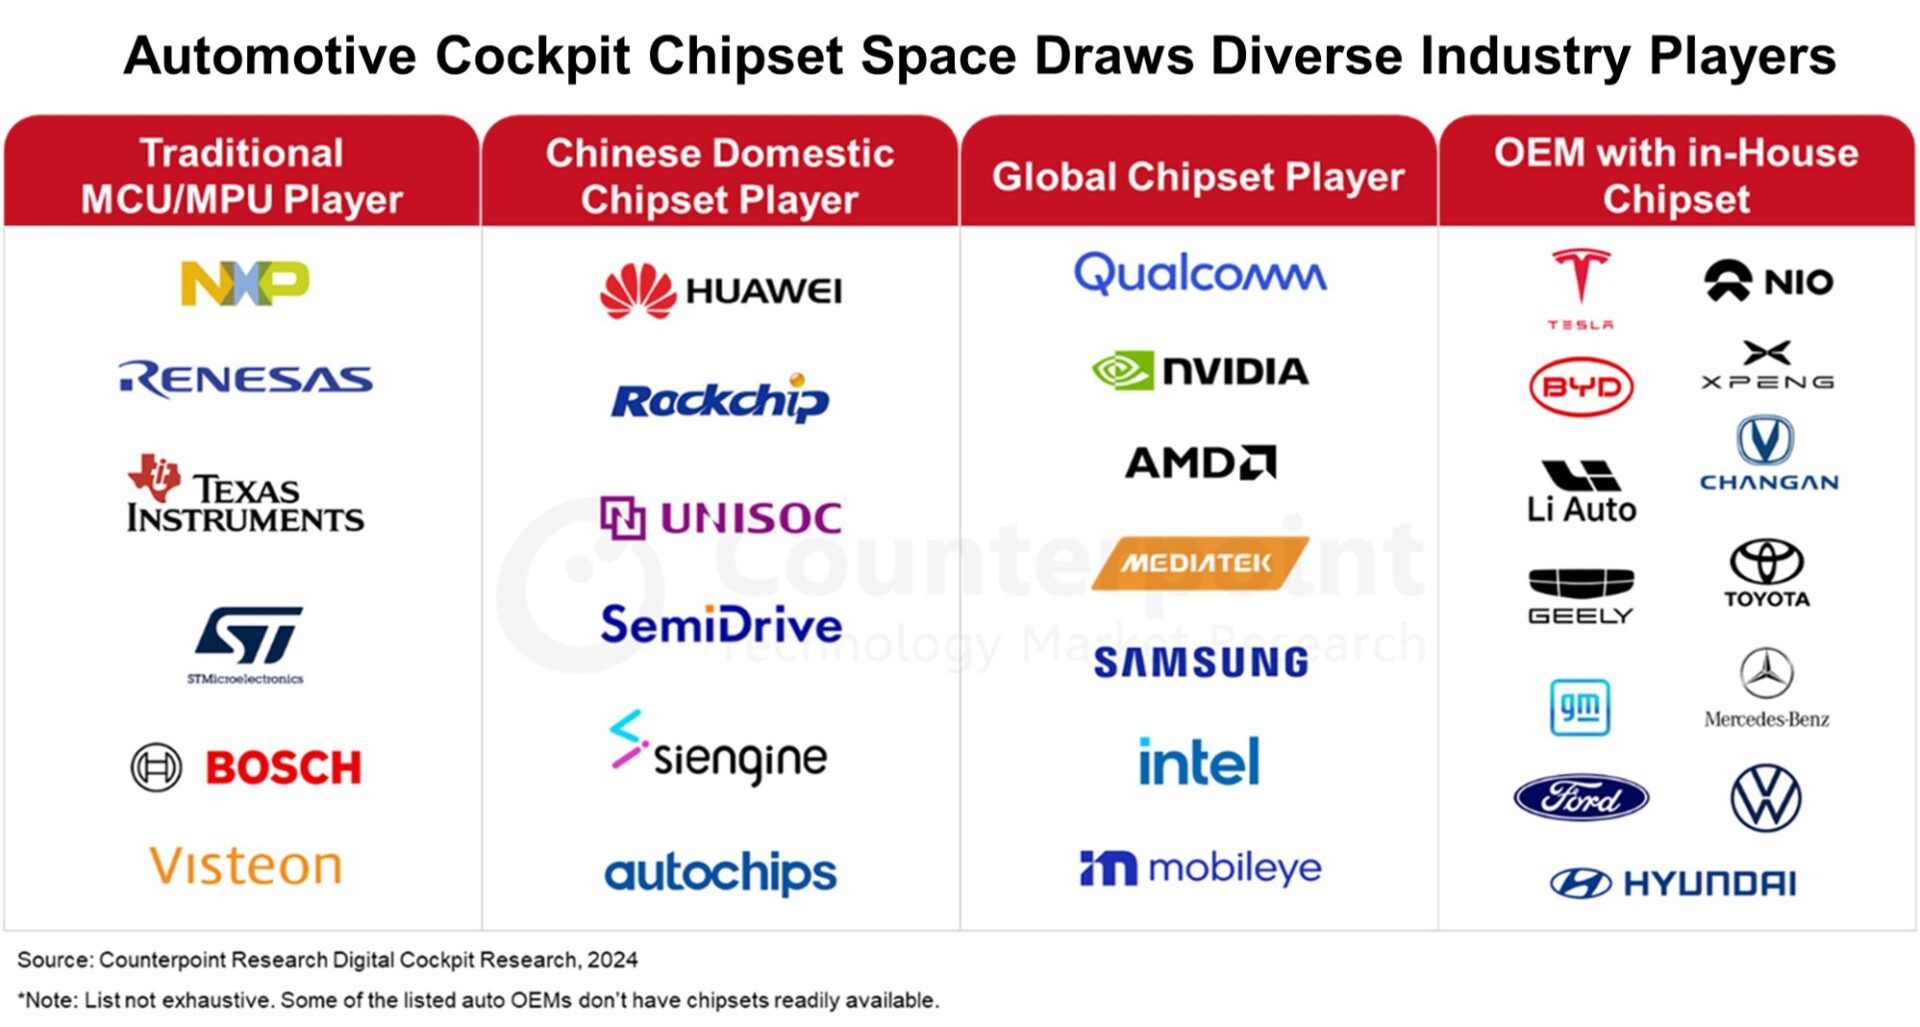 Automotive Cockpit Chipset Space Draws Diverse Industry Players